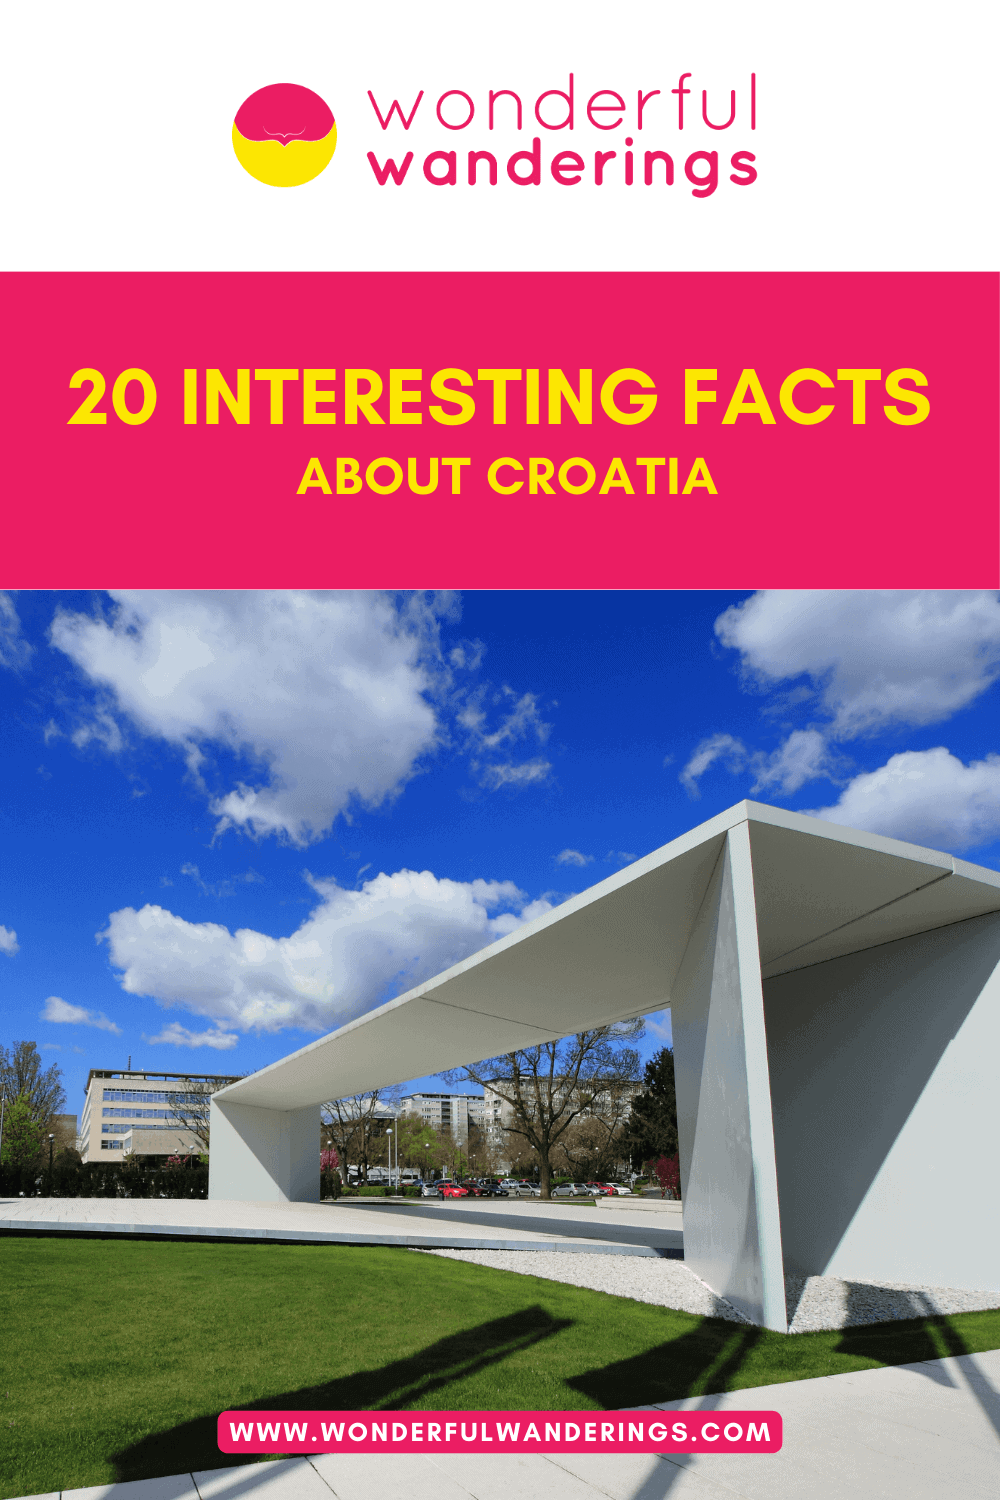 Croatia Interesting Facts Pinterest image